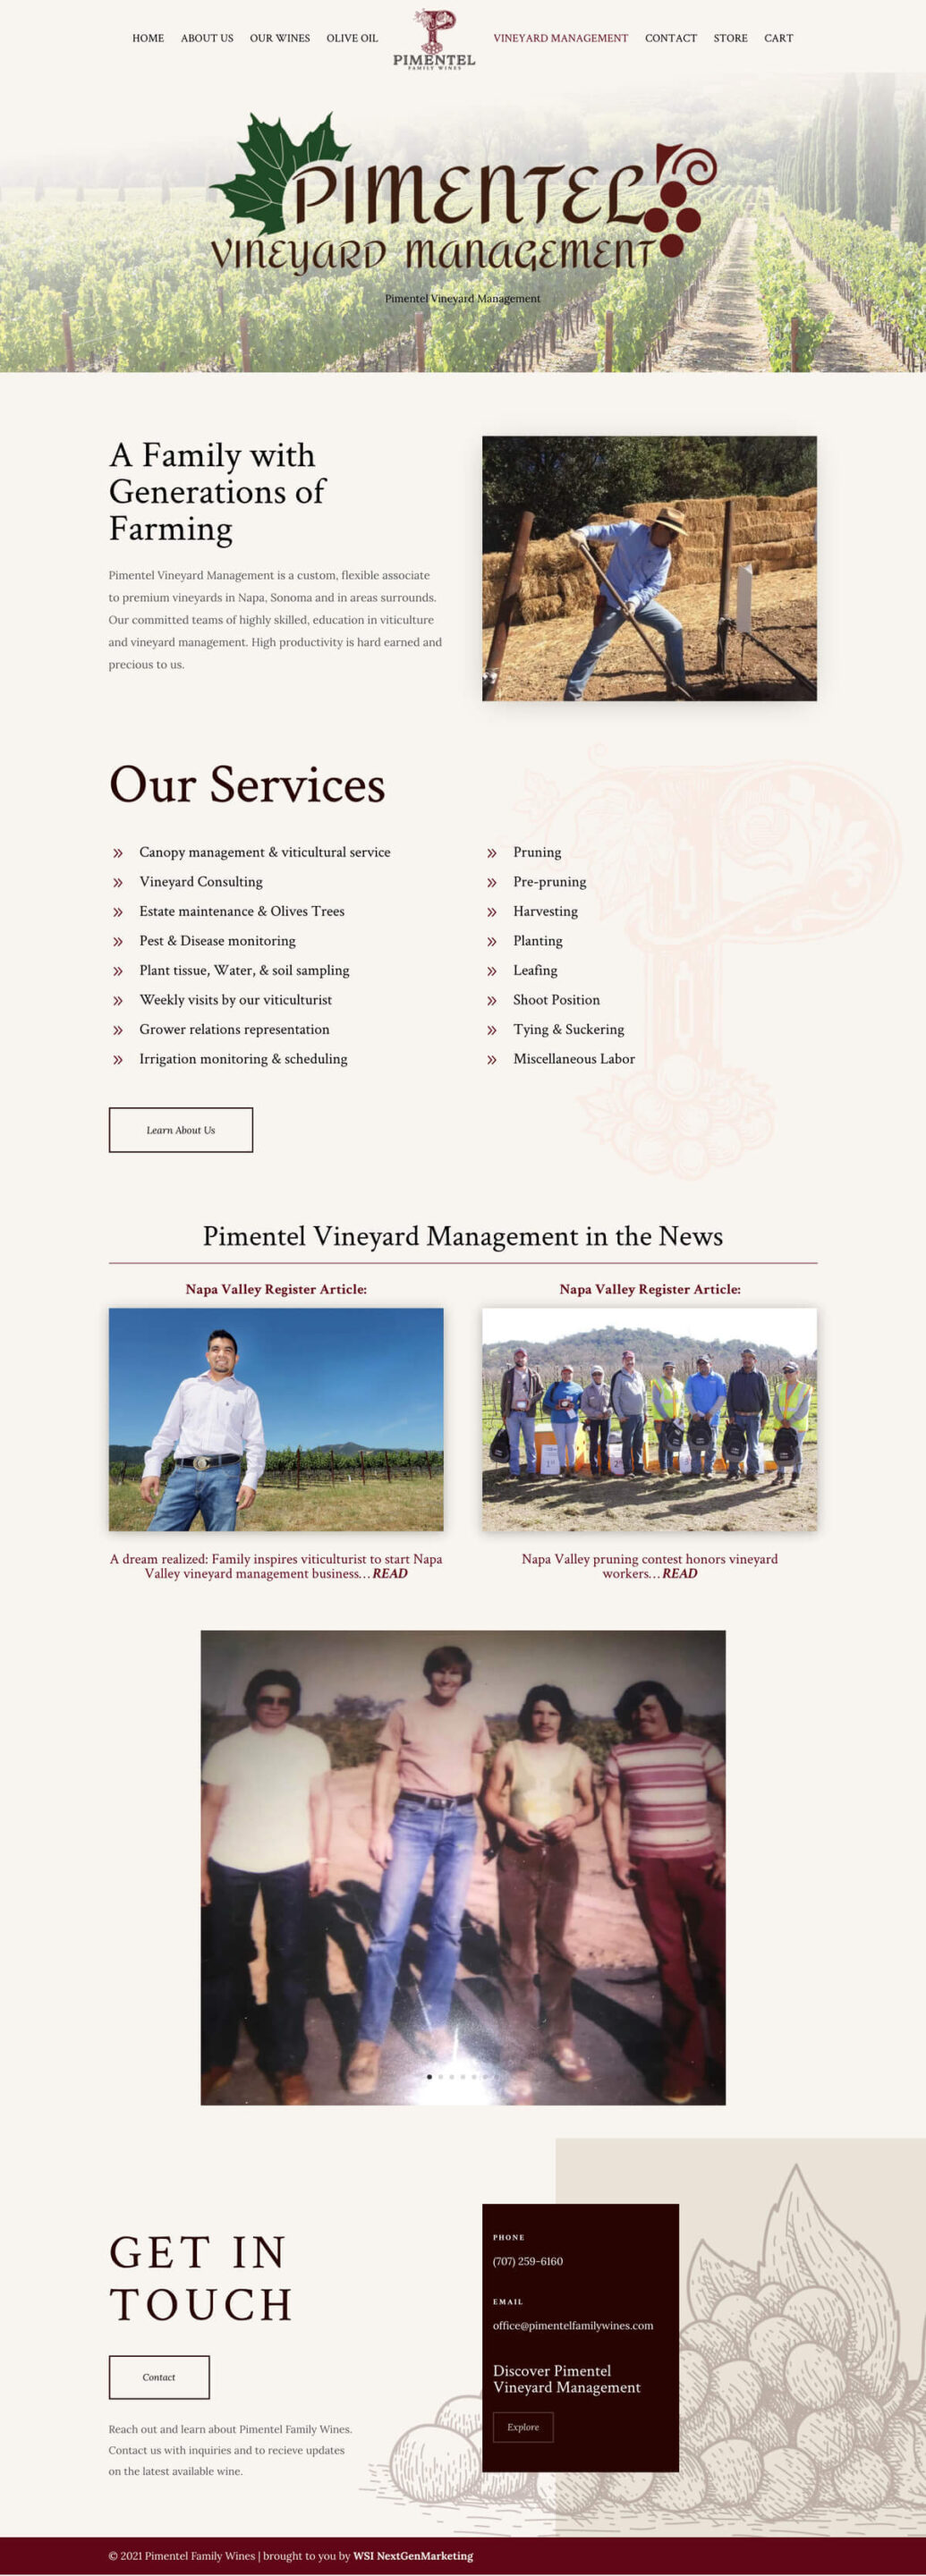 Pimentel-vineyard-management-winery-website-design